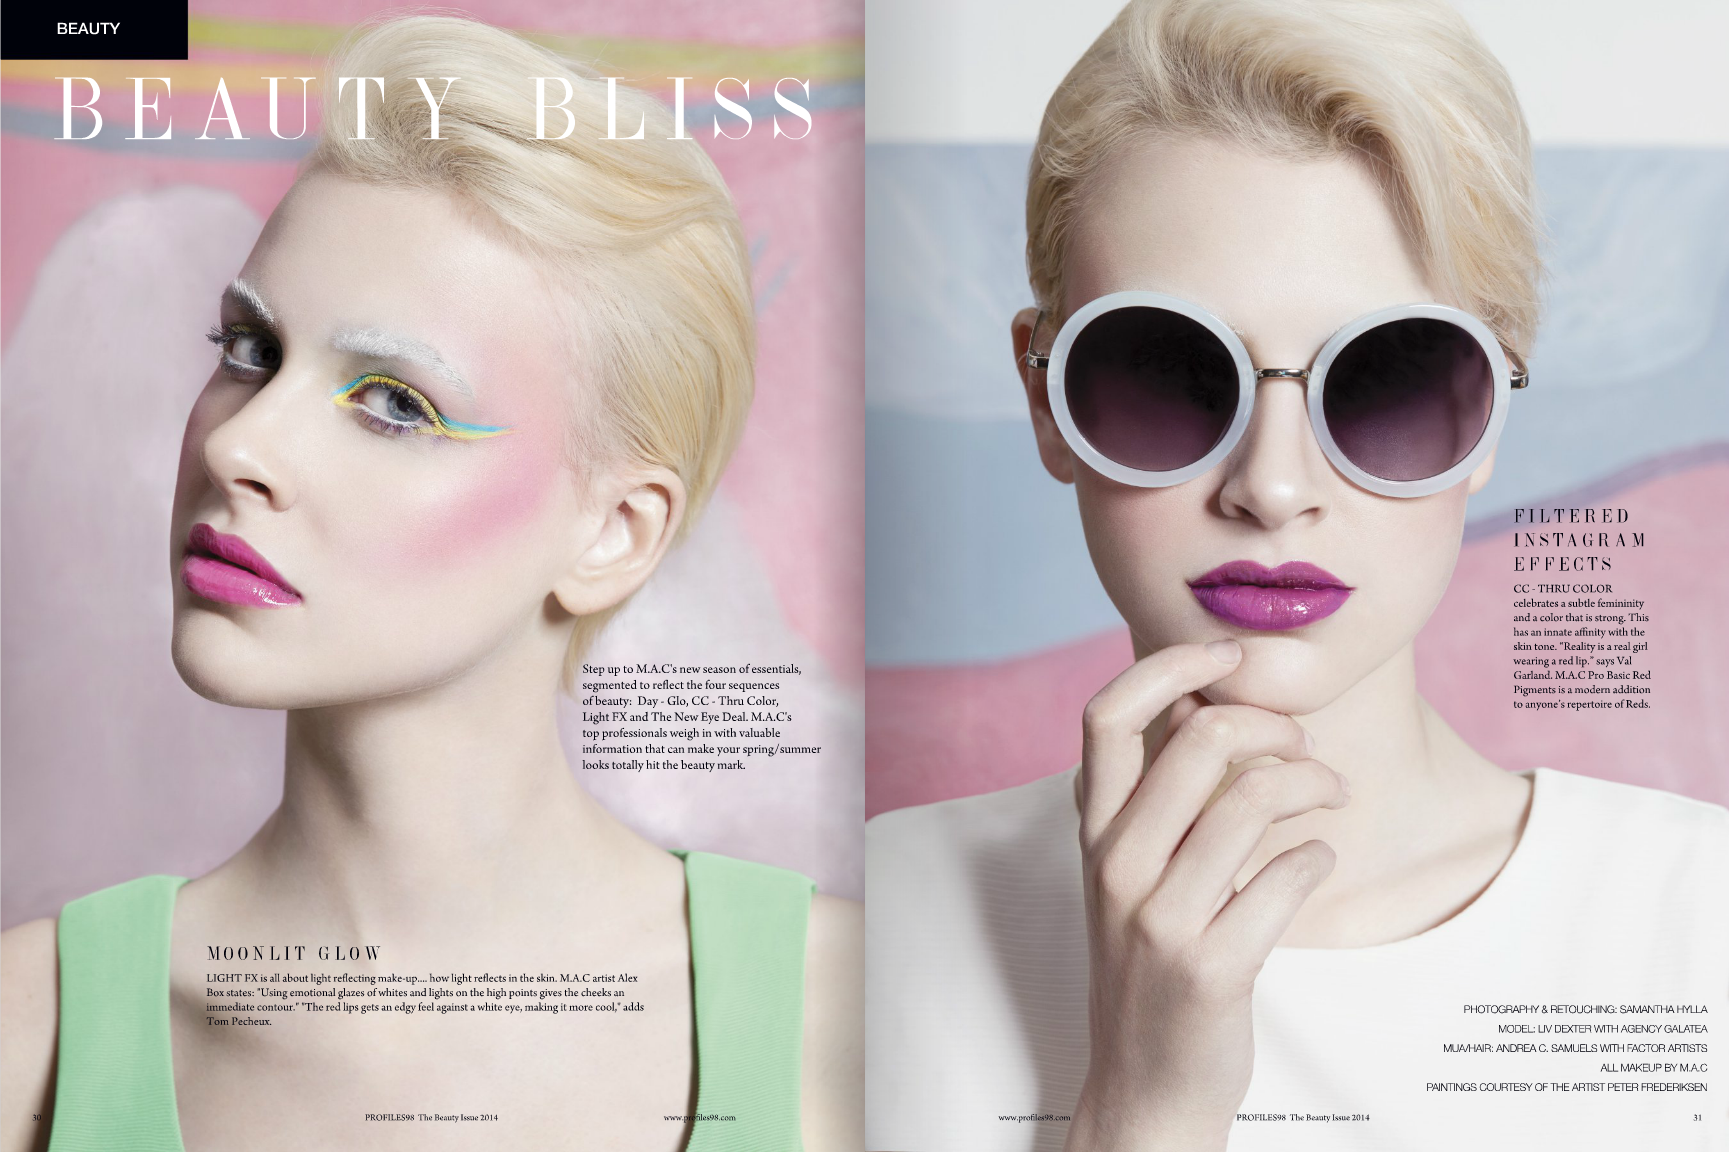 Profiles Magazine - Samantha Hylla